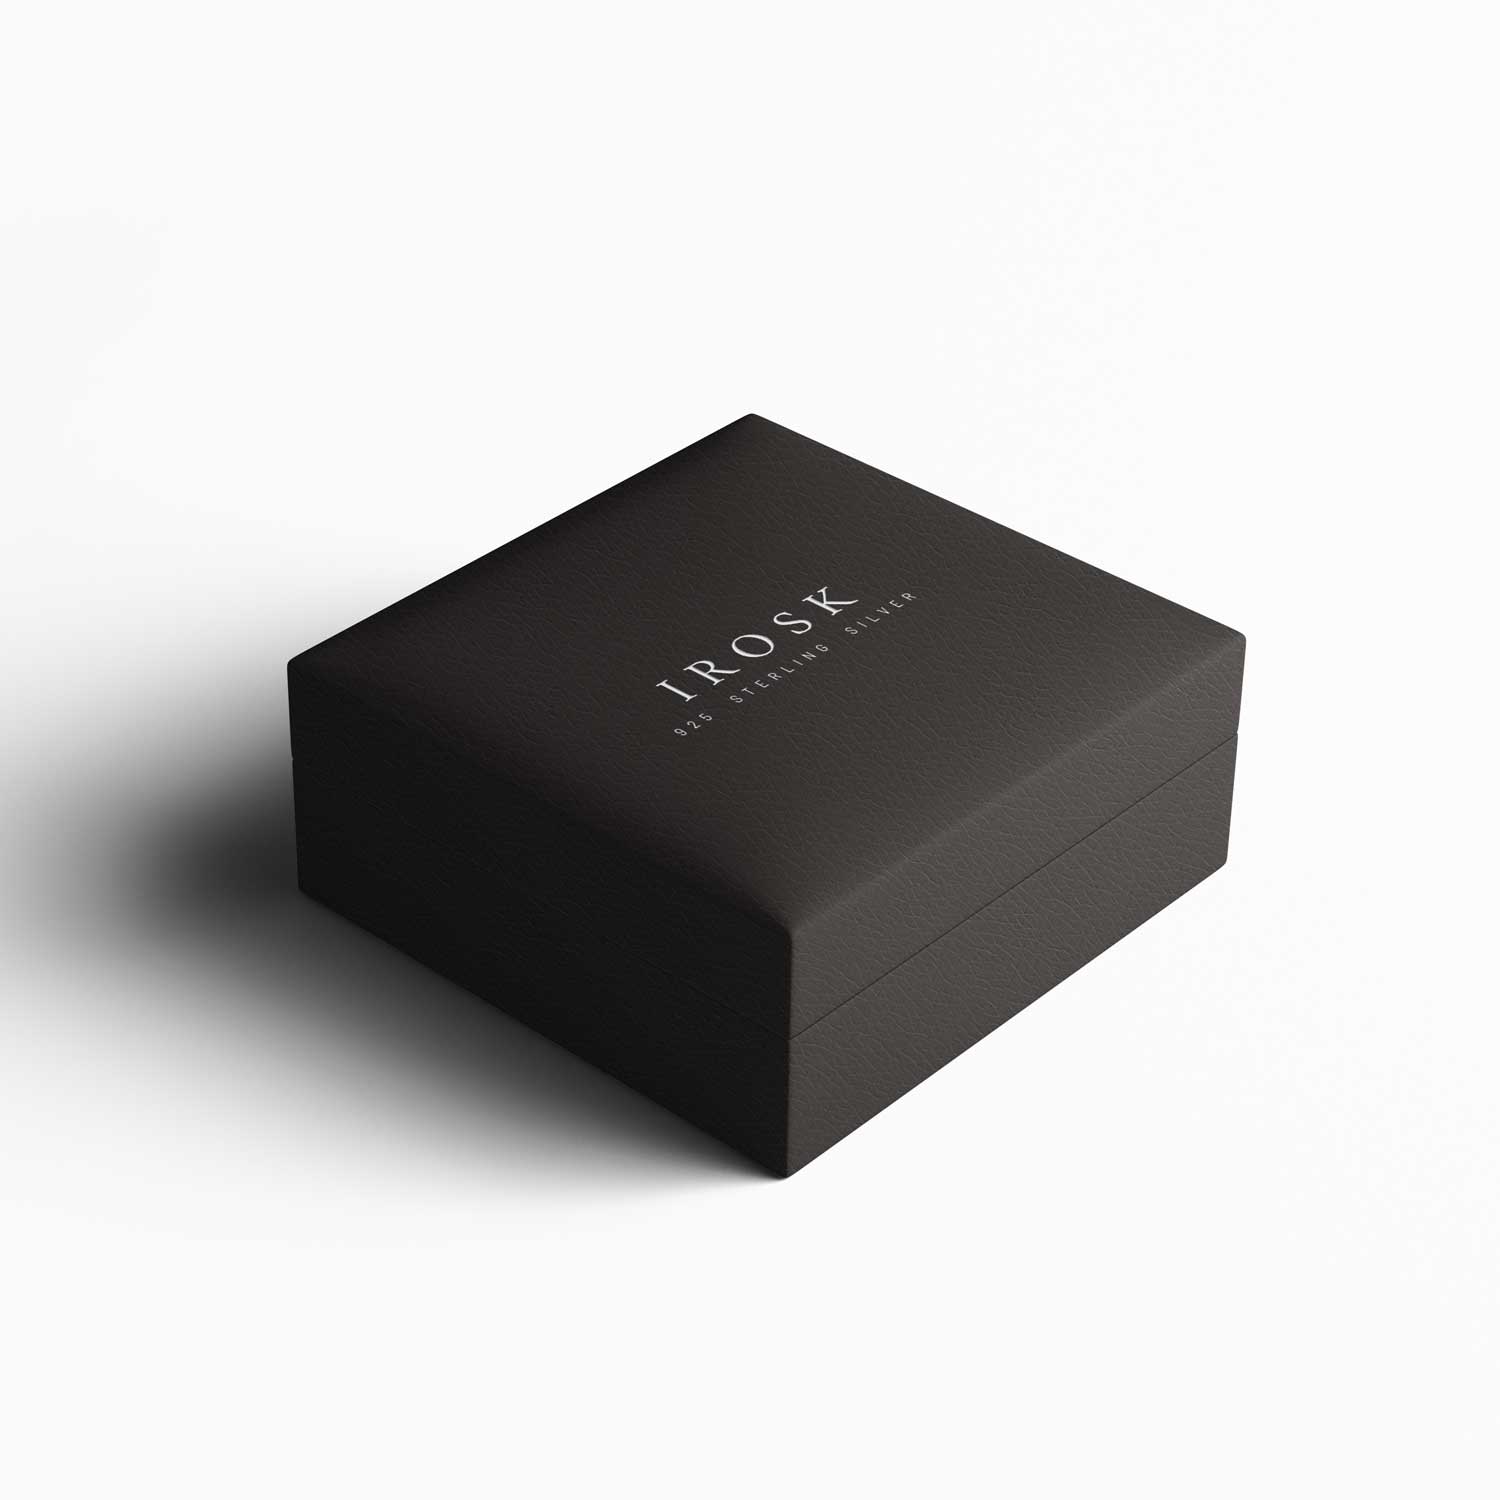 Irosk jewellery box for added luxury